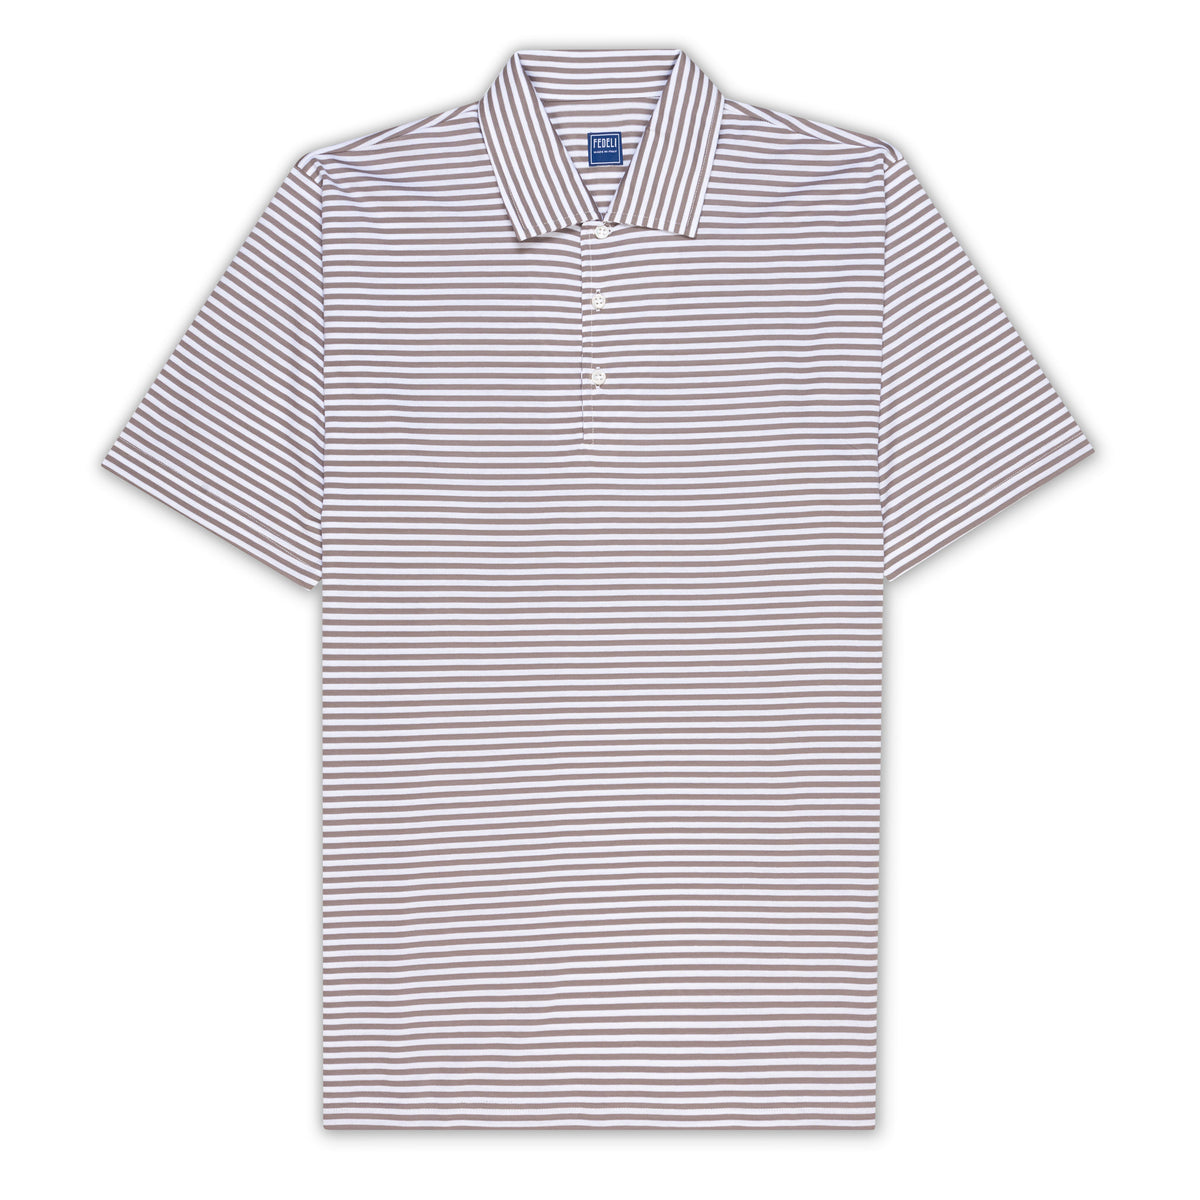 FEDELI "Libeccio" Gray-White Striped Cotton Jersey Polo Shirt NEW